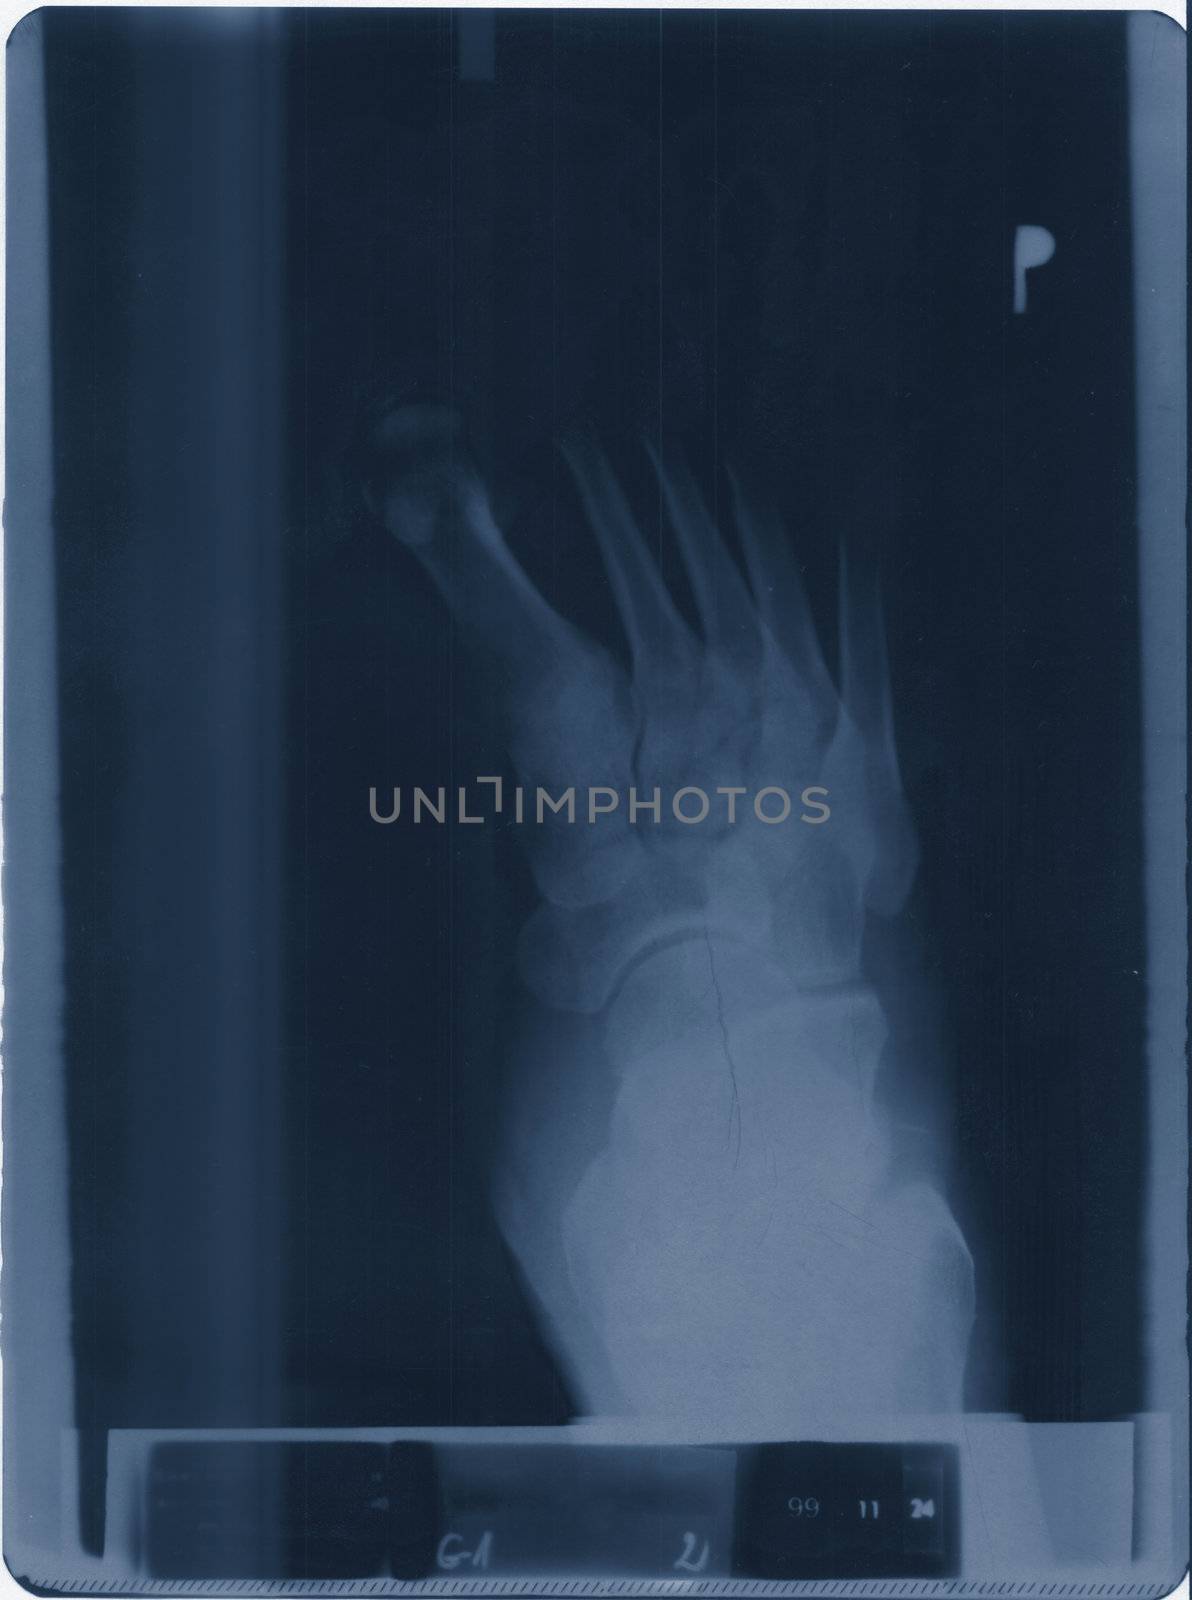 x-ray by iwka